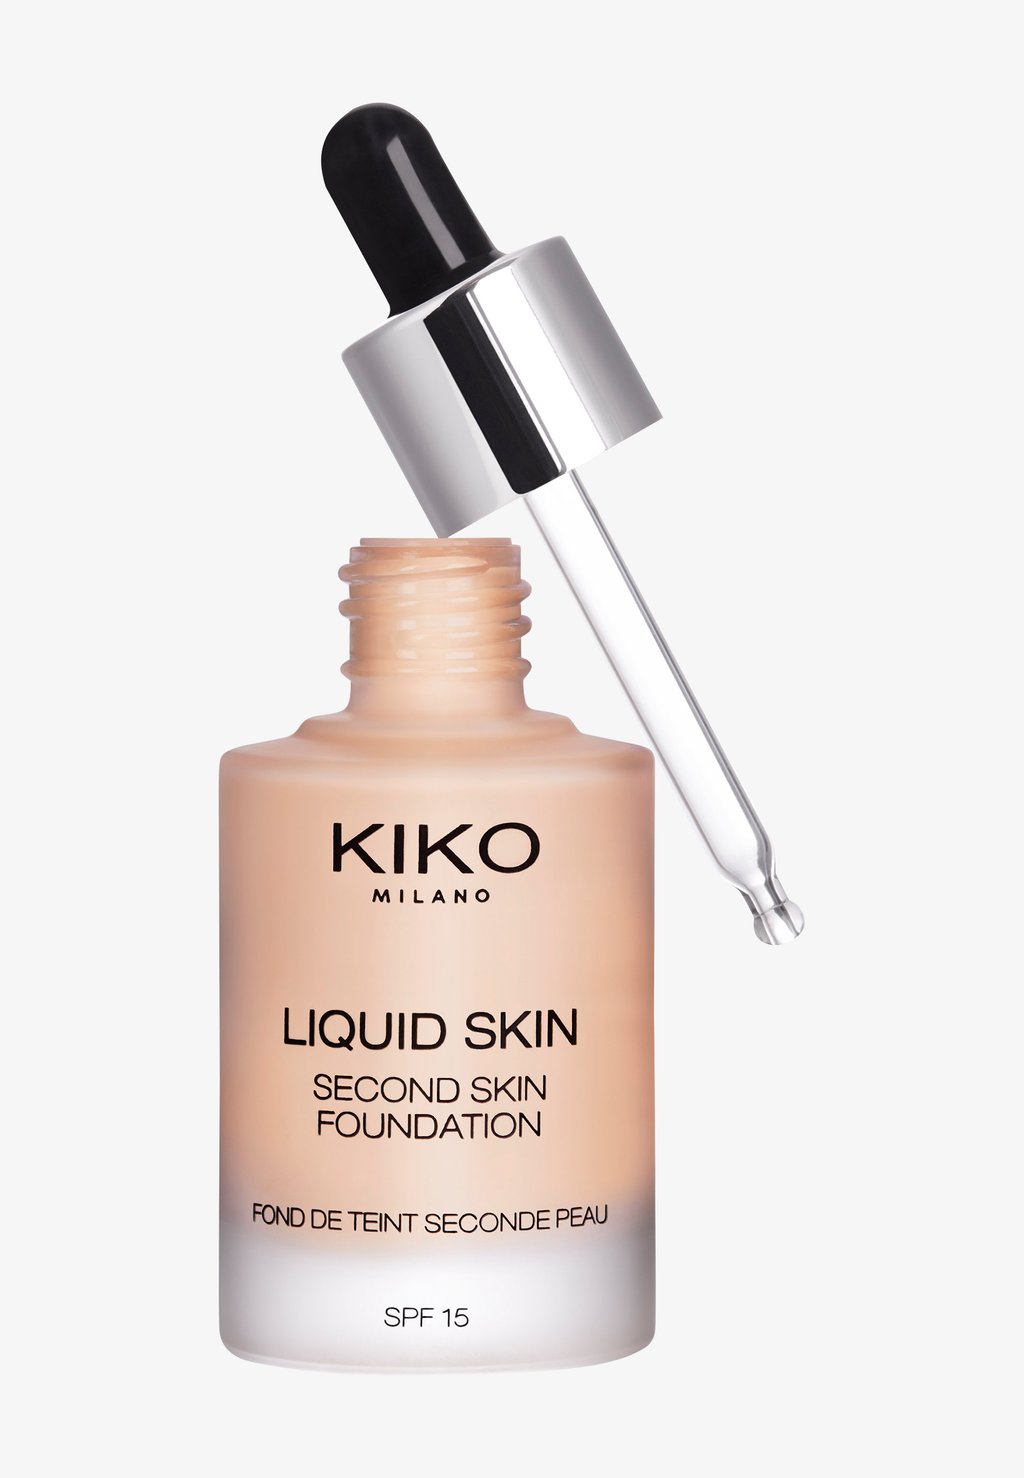 Тональный крем Liquid Skin Second Skin Foundation KIKO Milano, цвет 05 neutral